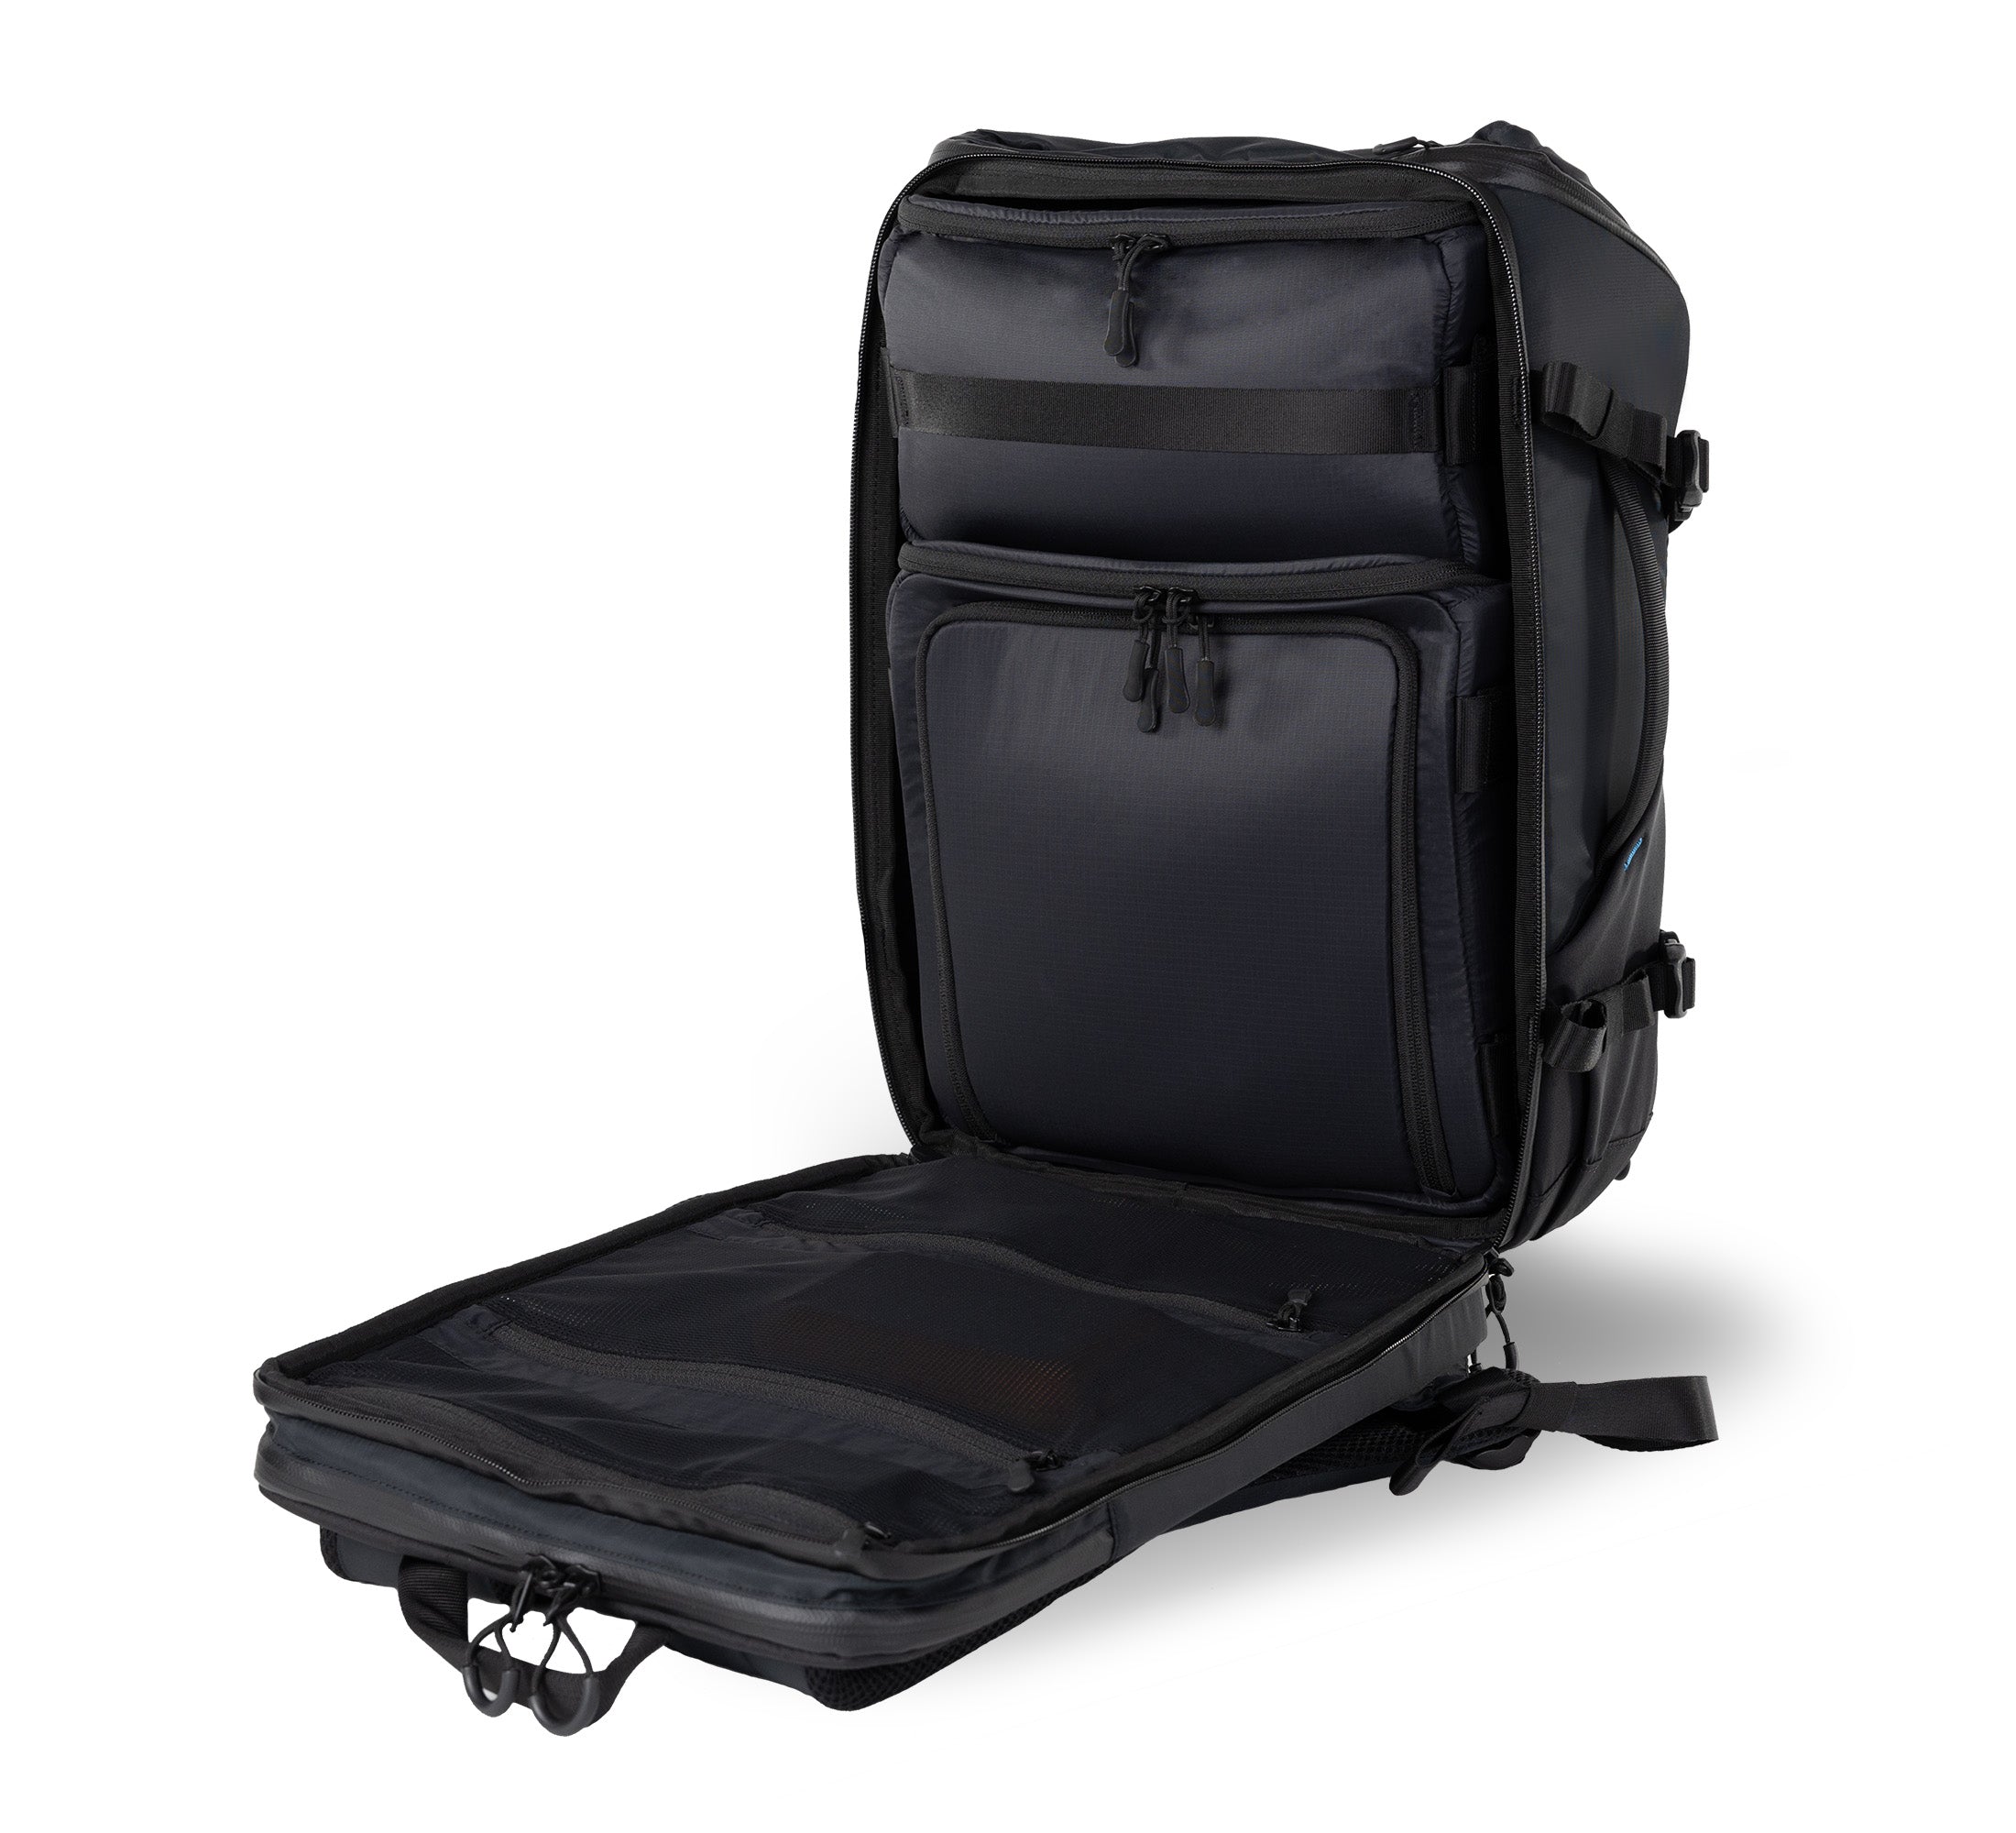 Adapt backpack 25L - Komplett-Set